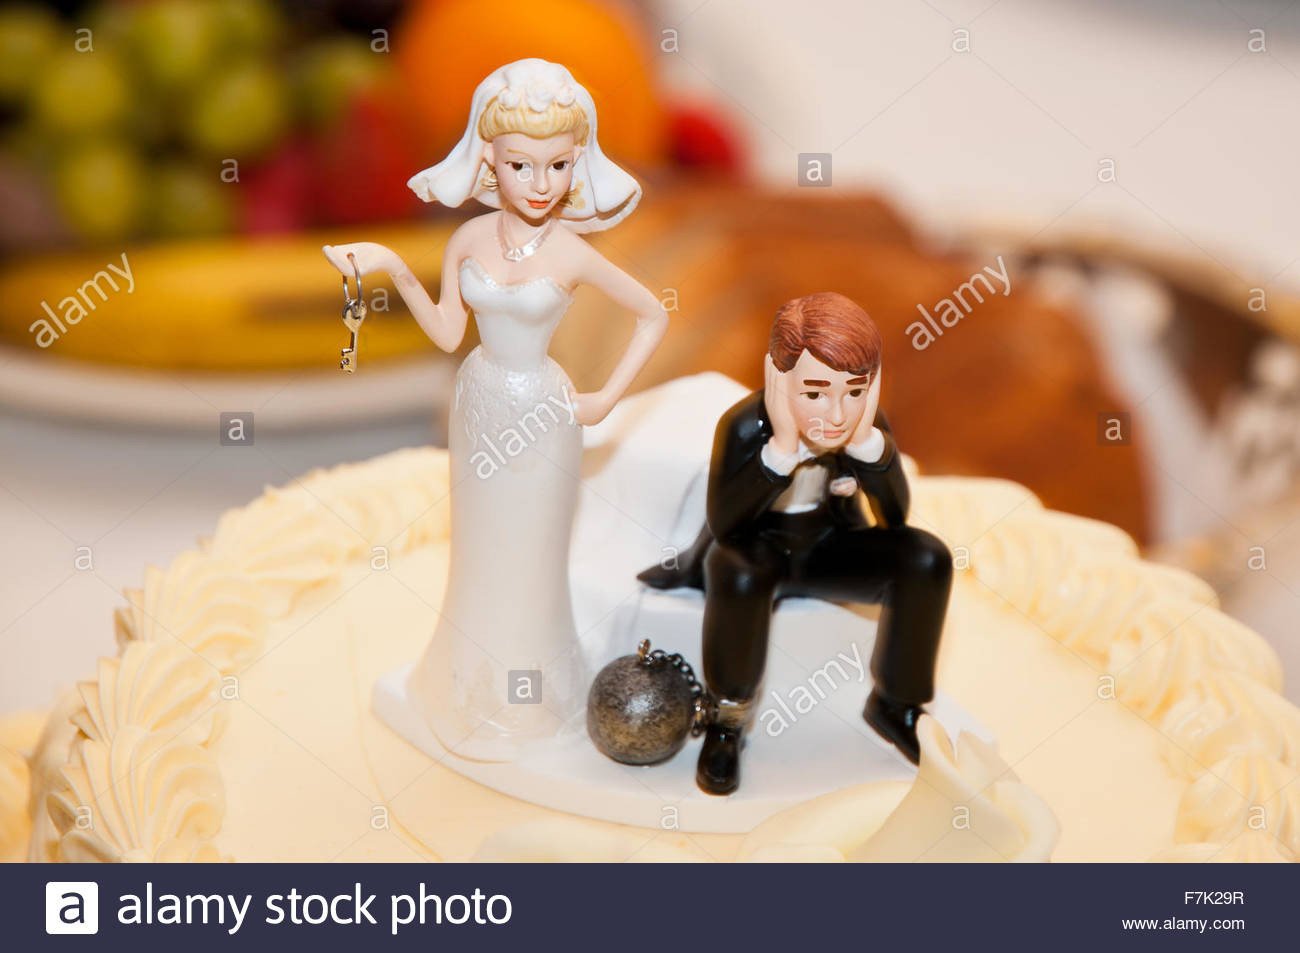 Жених невеста на торт. Фигурки жениха и невесты на торт. Торт с фигурками. Фигурка жених и невеста. Свадебный торт с фигурками жениха и невесты.